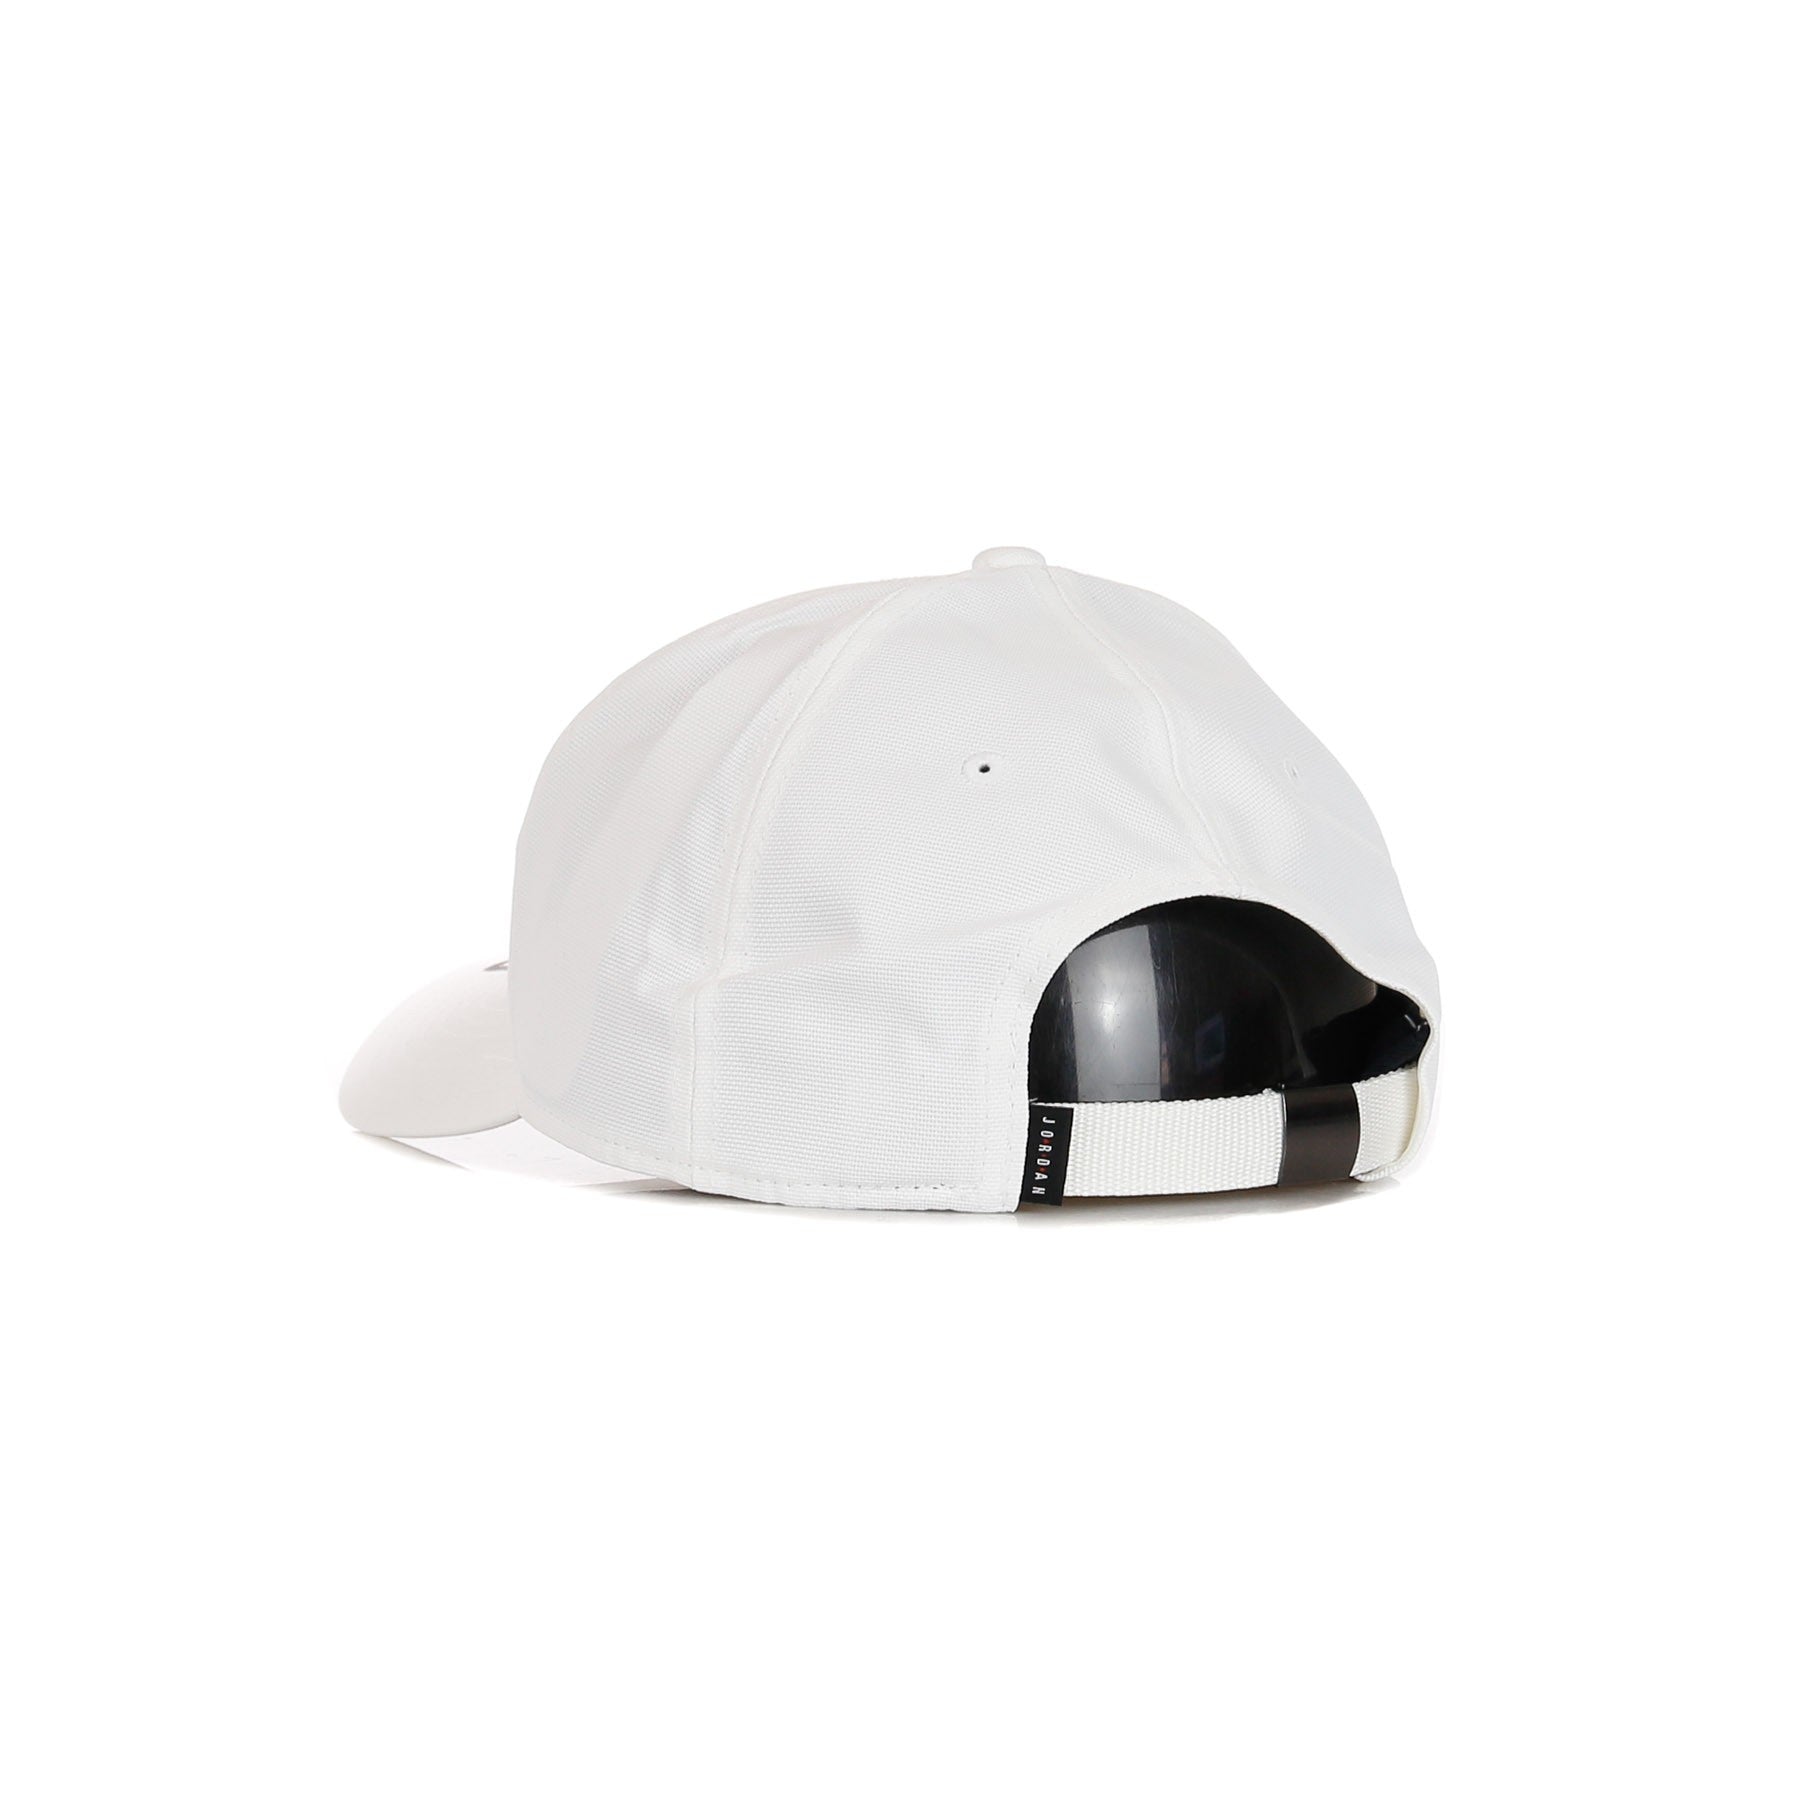 Classic 99 Metal Cap White Curved Visor Cap for Men